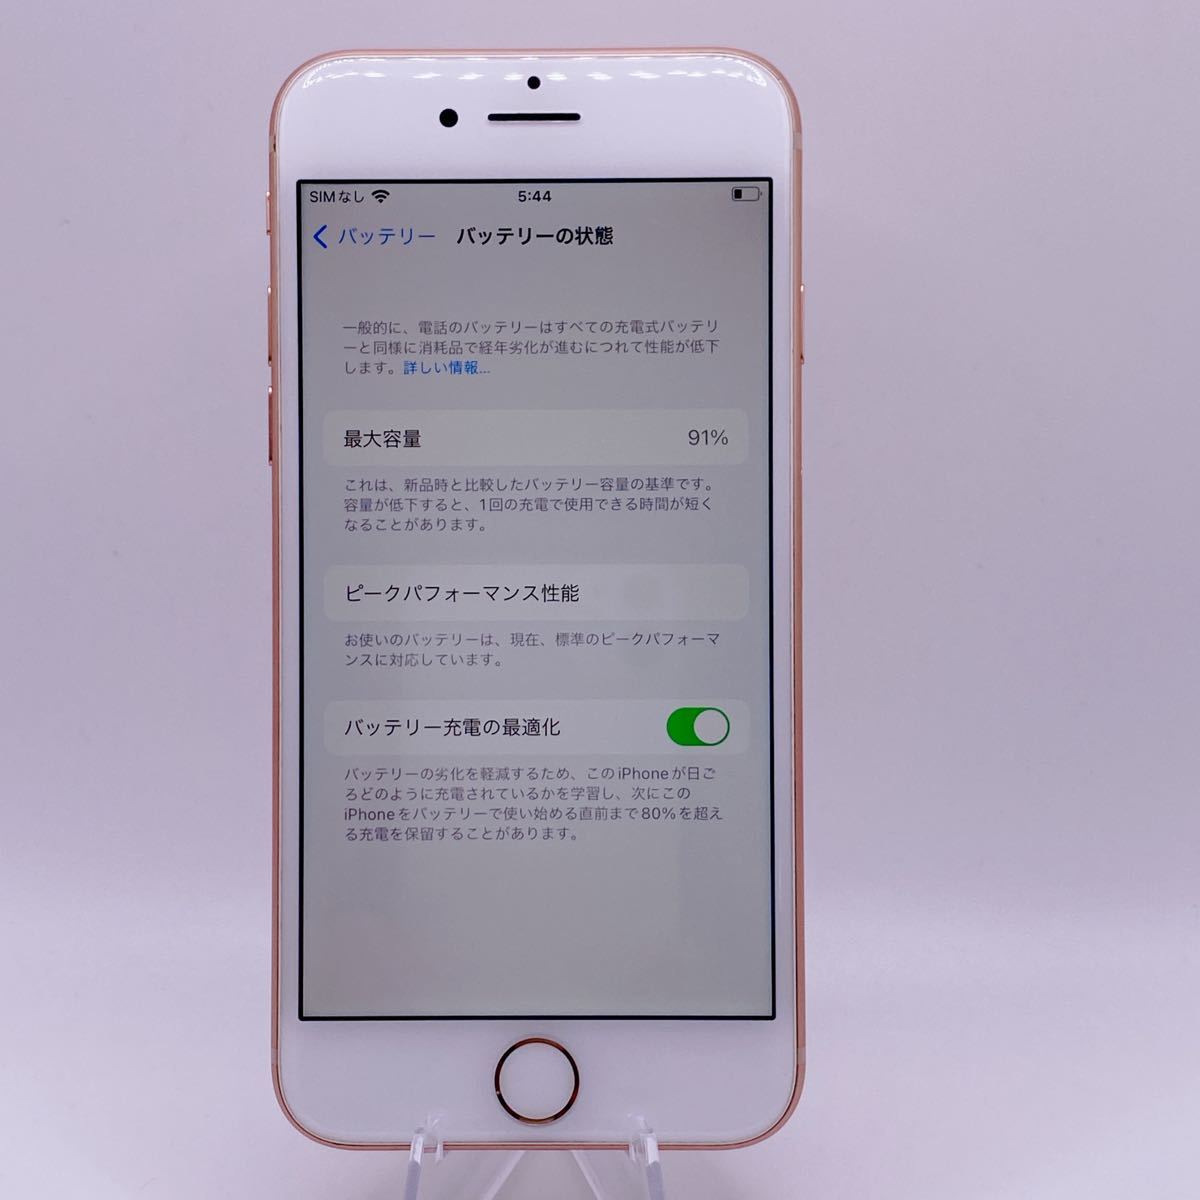 iPhone 8 Gold 256 GB SIMフリー profile.co.mz